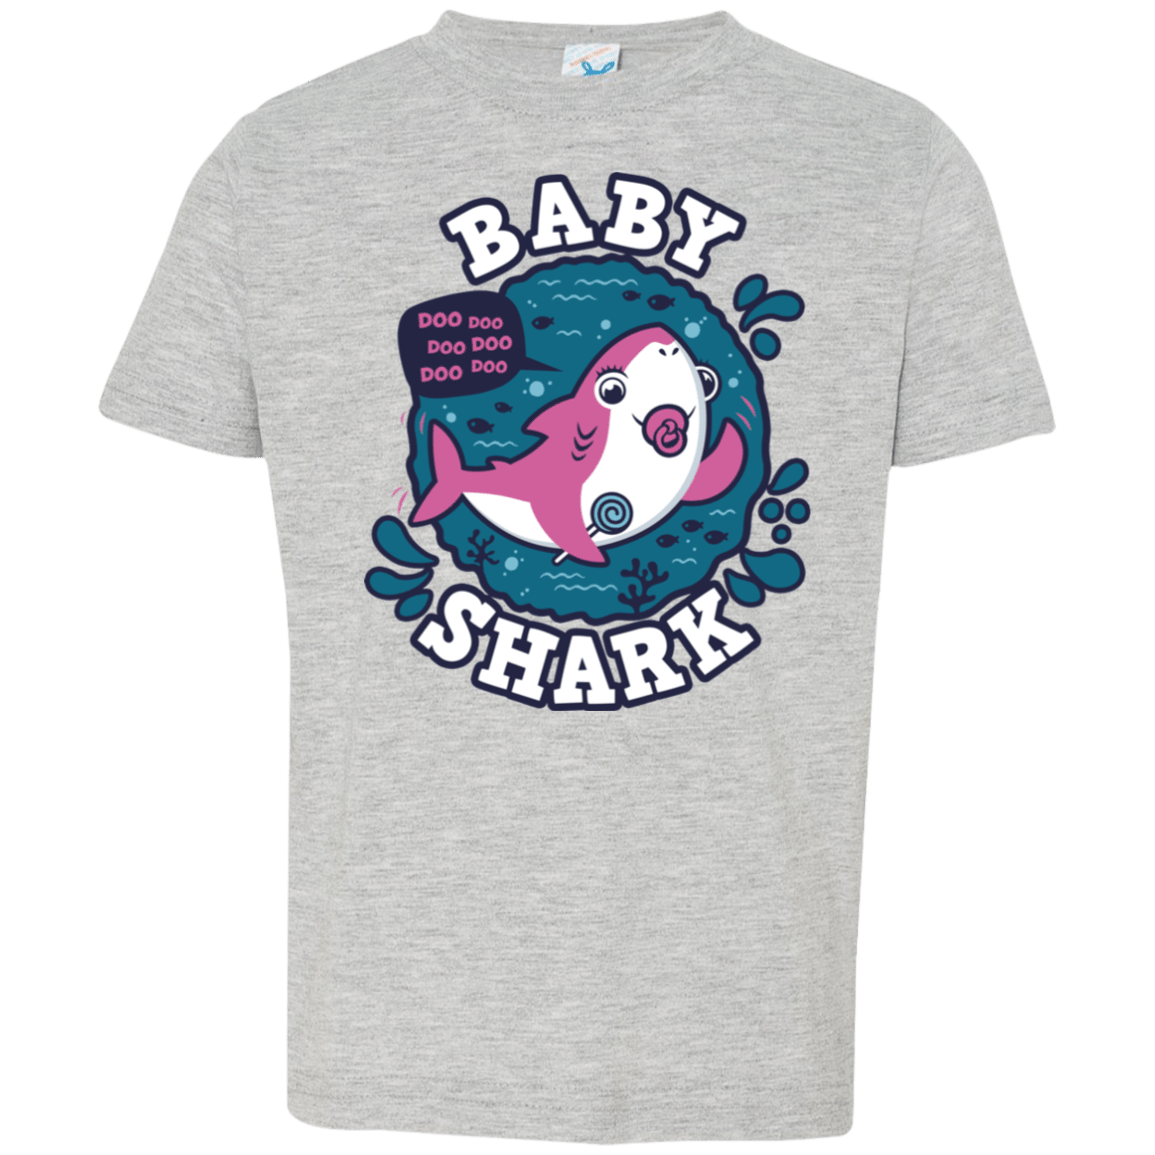 T-Shirts Heather Grey / 2T Shark Family trazo - Baby Girl chupete Toddler Premium T-Shirt